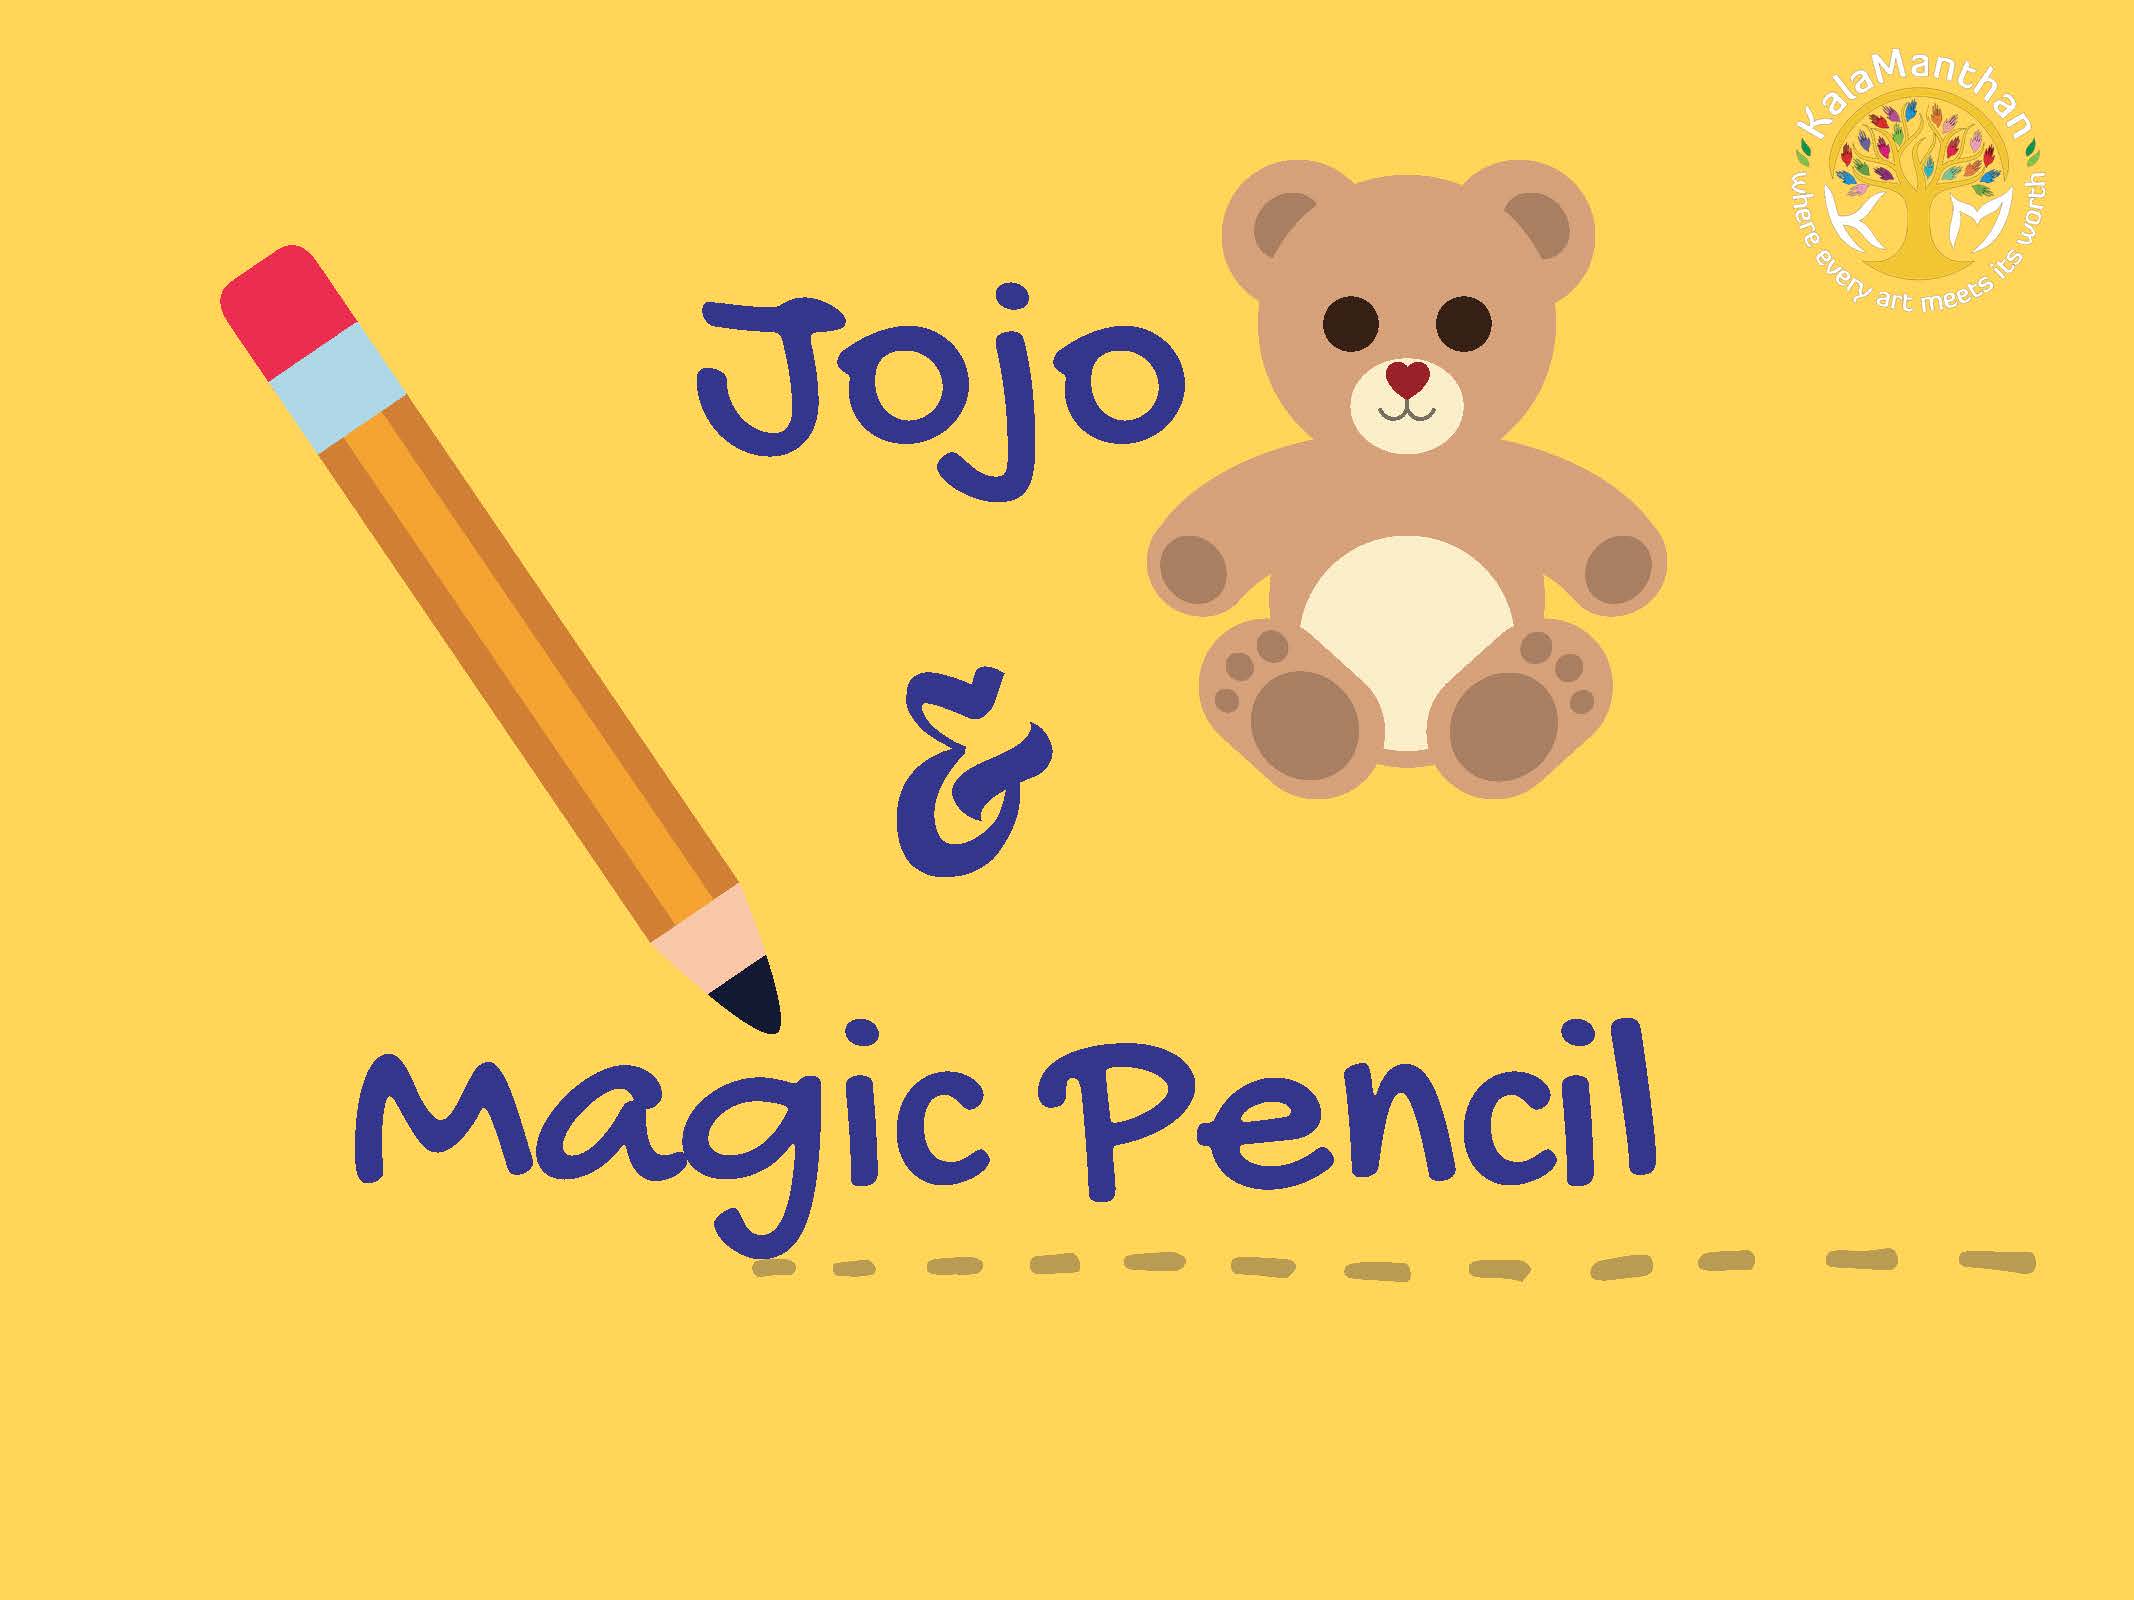 JoJo and Magic Pencil